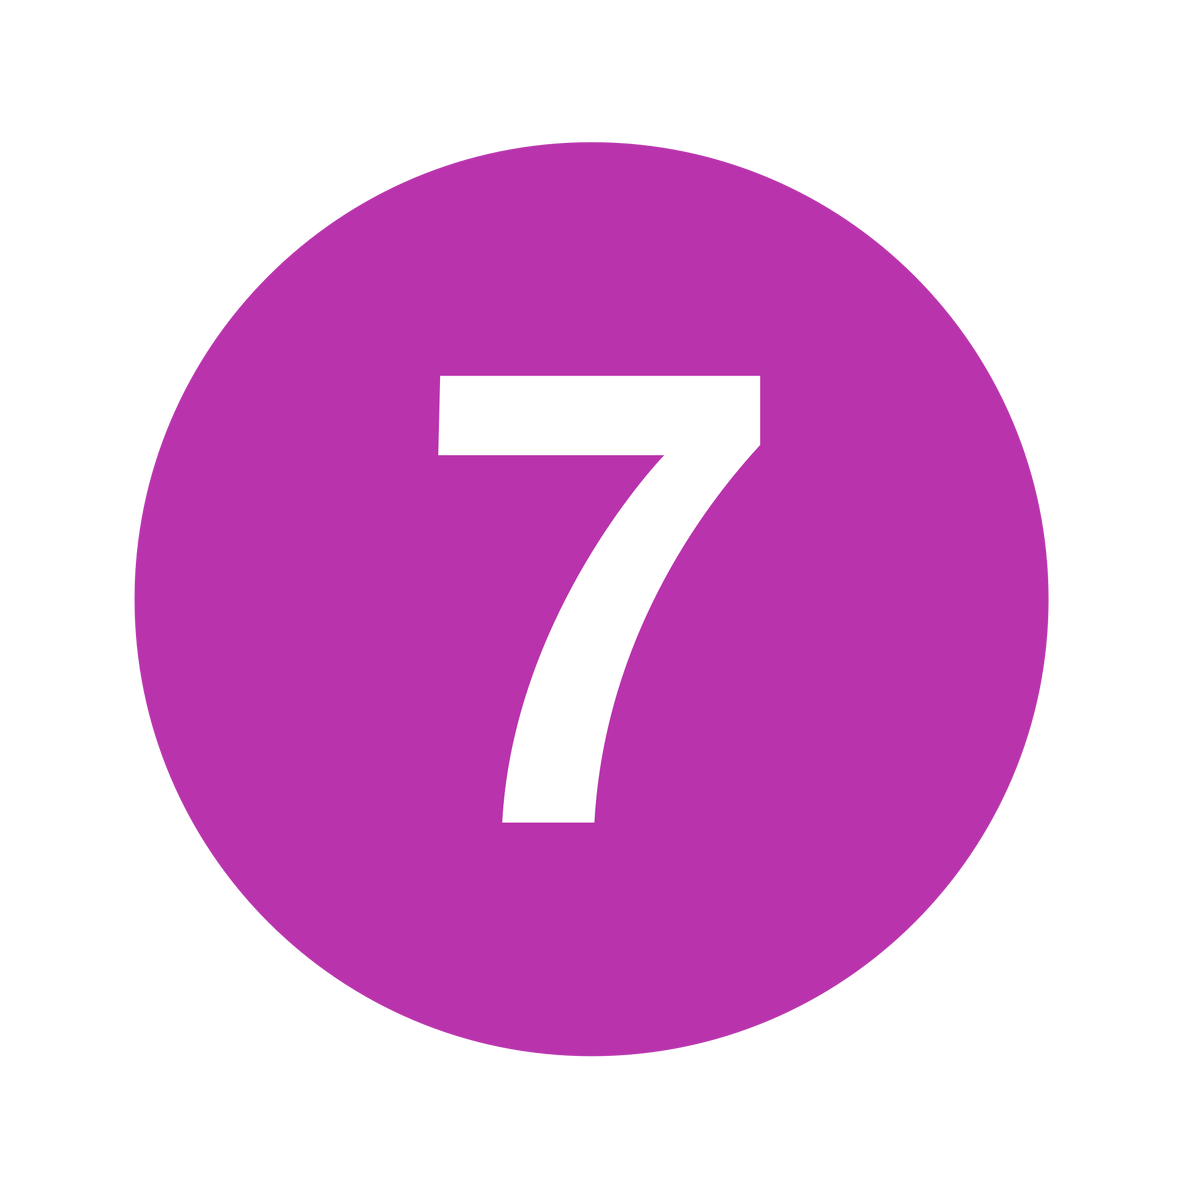 7. Цифра 7 в круге. Цифры в кружочках. Кружок с цифрой 1. Цифра 1 в фиолетовом кружочке.